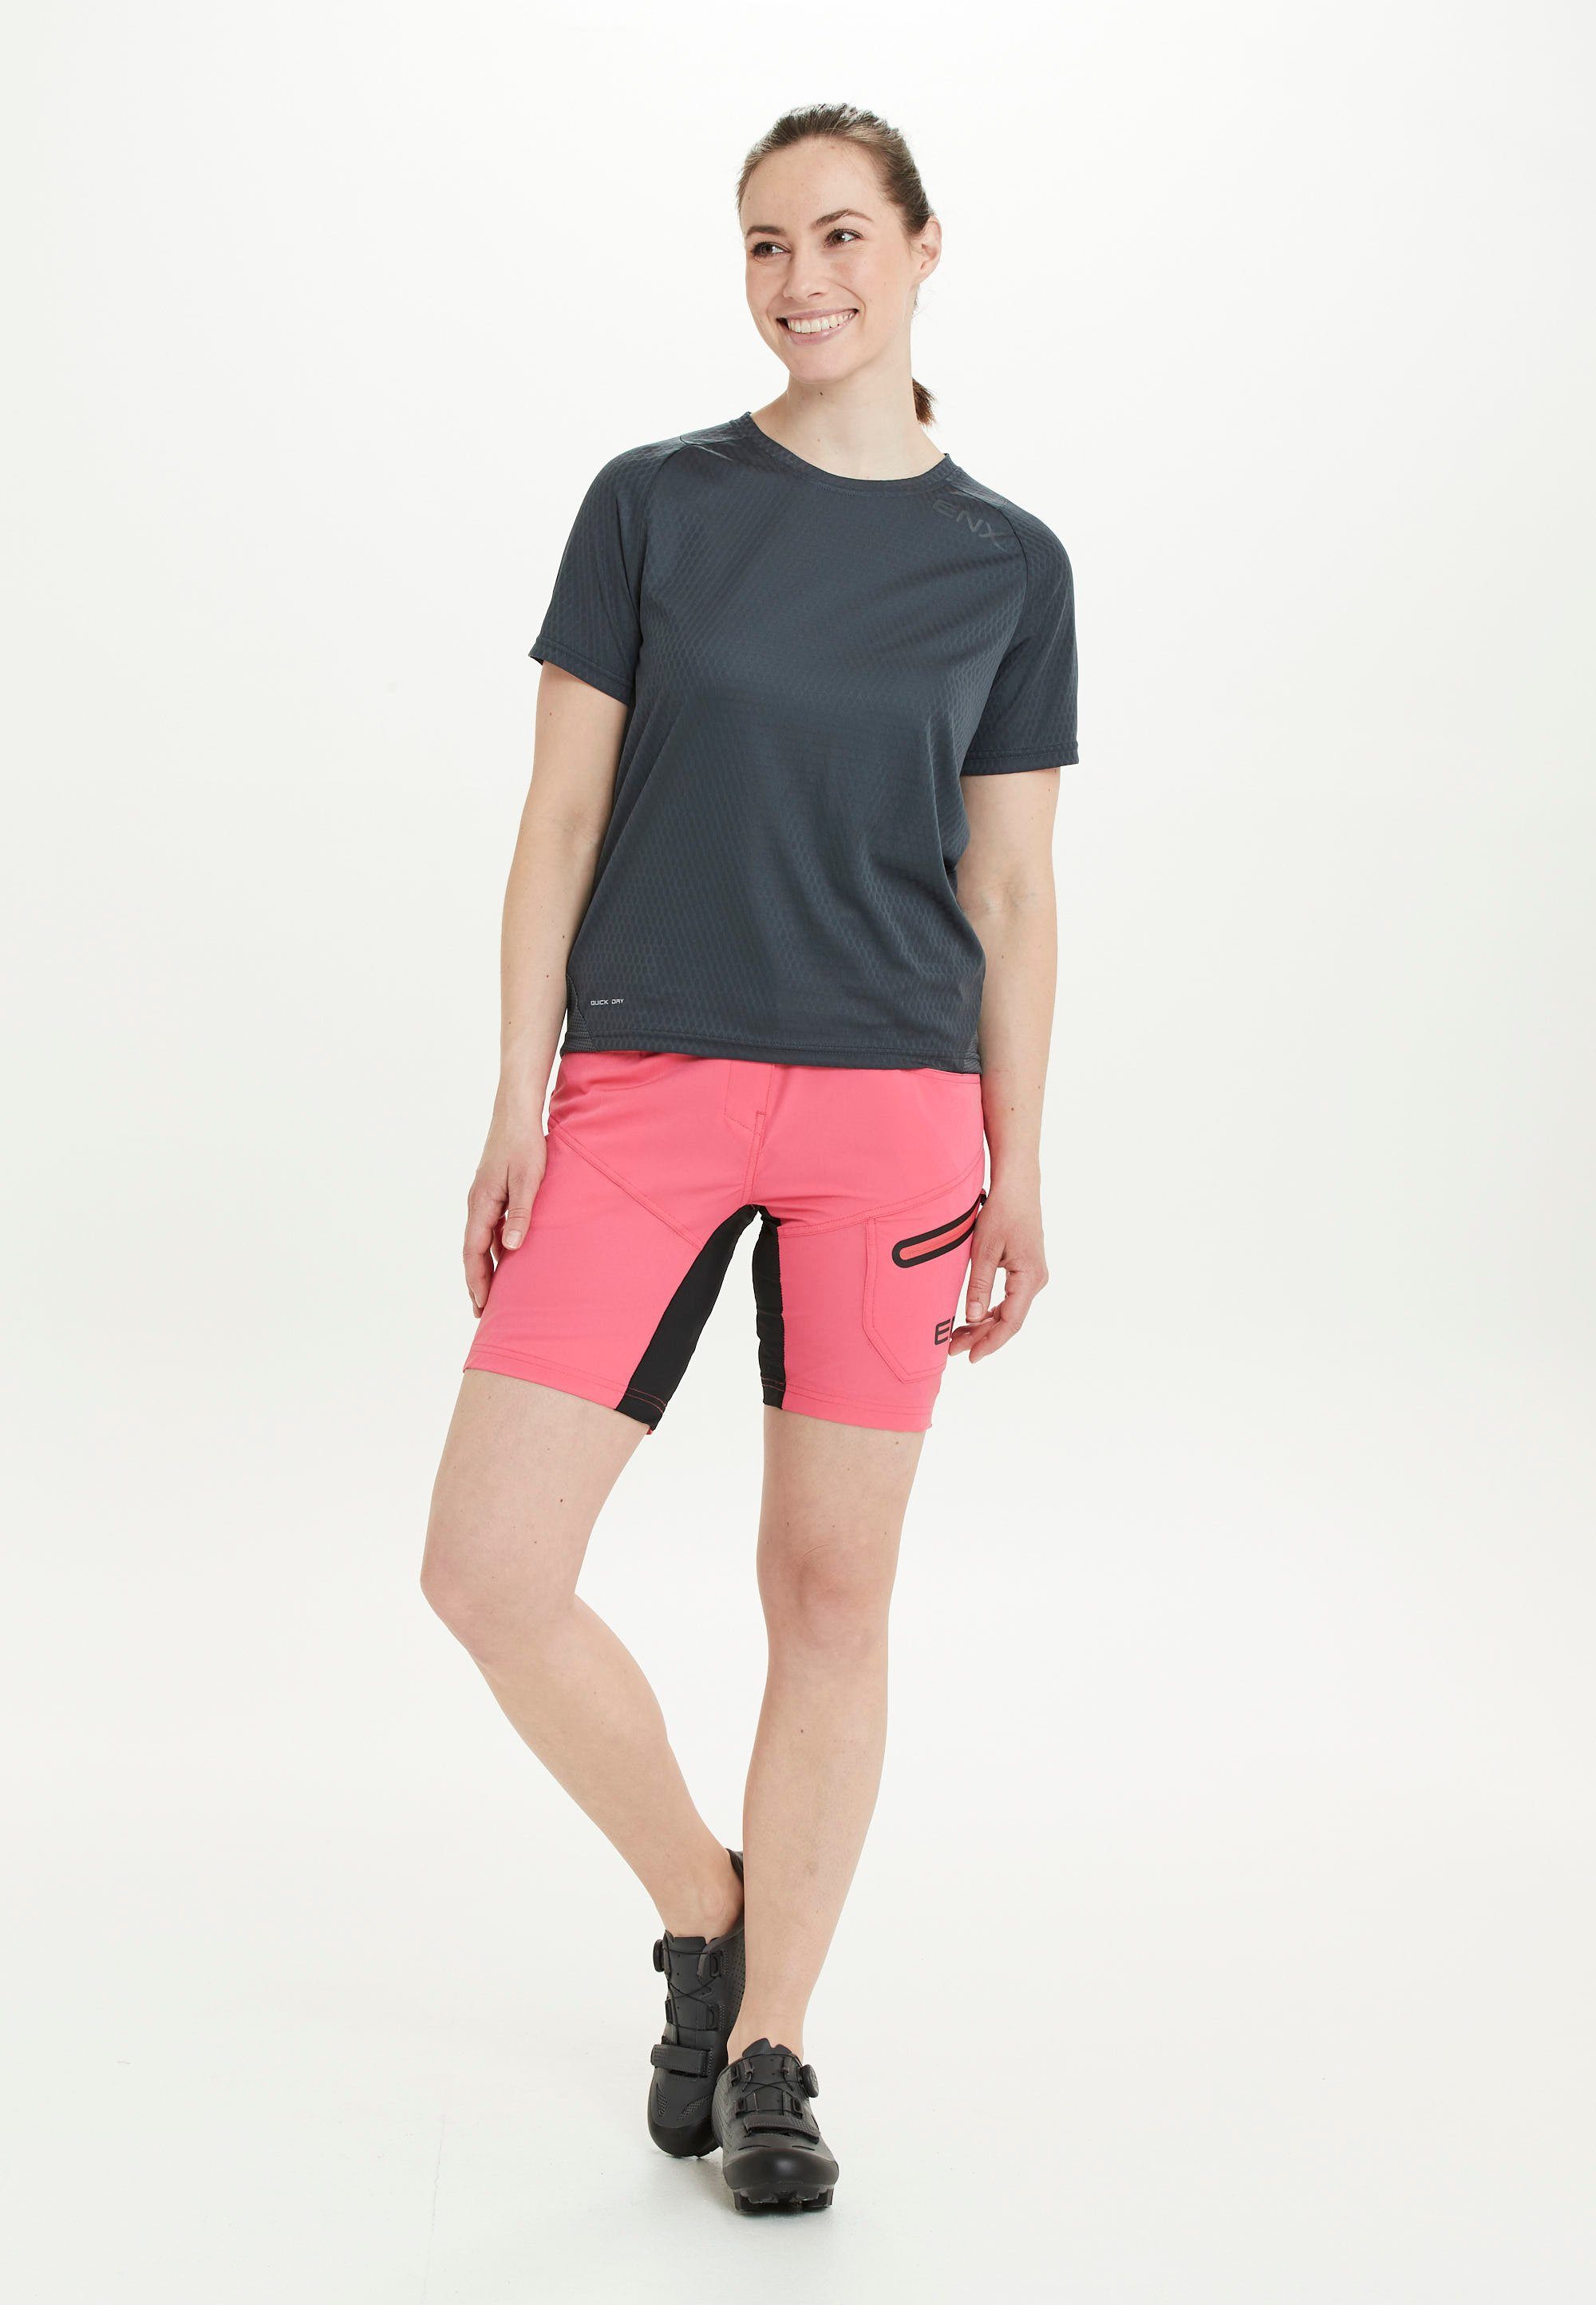 ENDURANCE Radhose Jamilla W mit rosa 2 1 Innen-Tights in herausnehmbarer Shorts